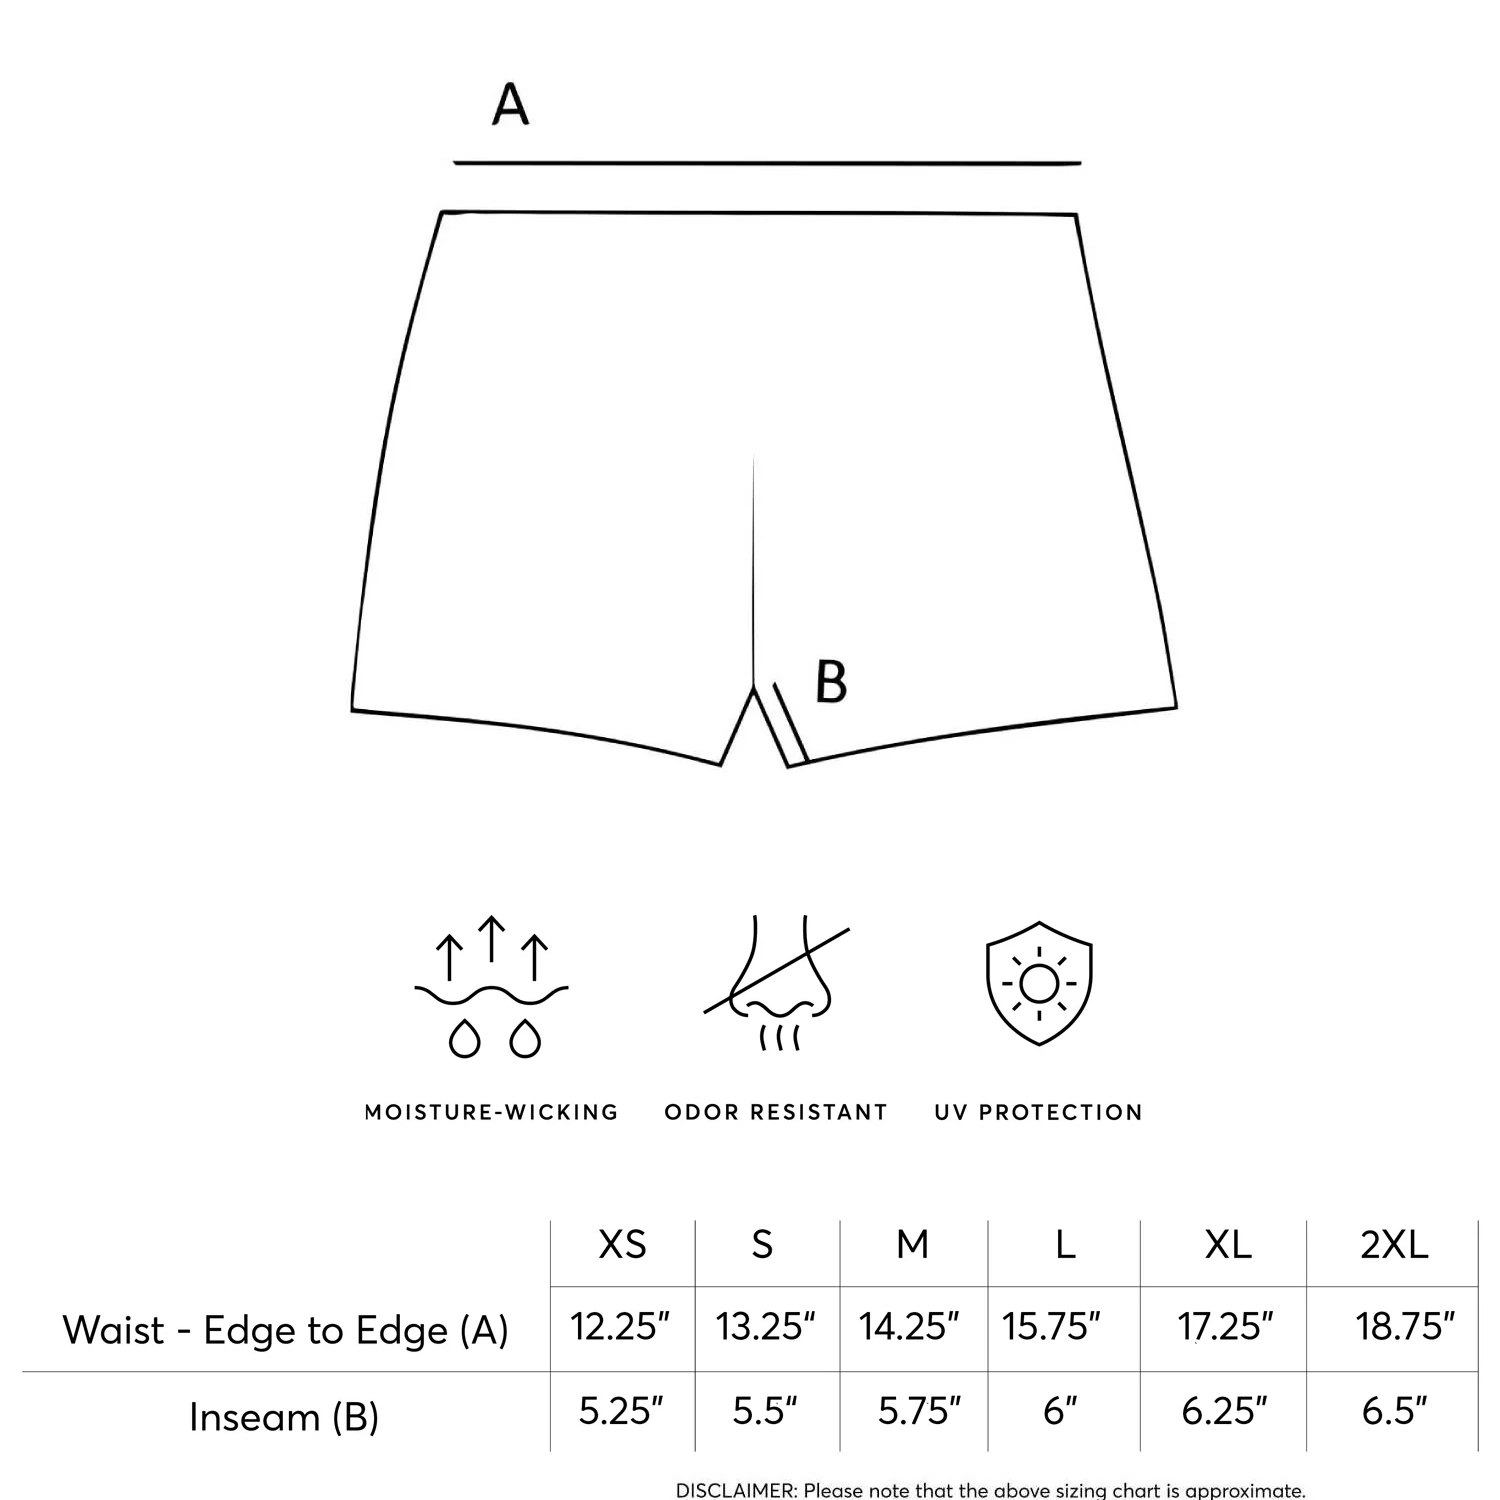 Expert Brand Women's Airstretch High-Rise 5" Bike Shorts, S, Black A2